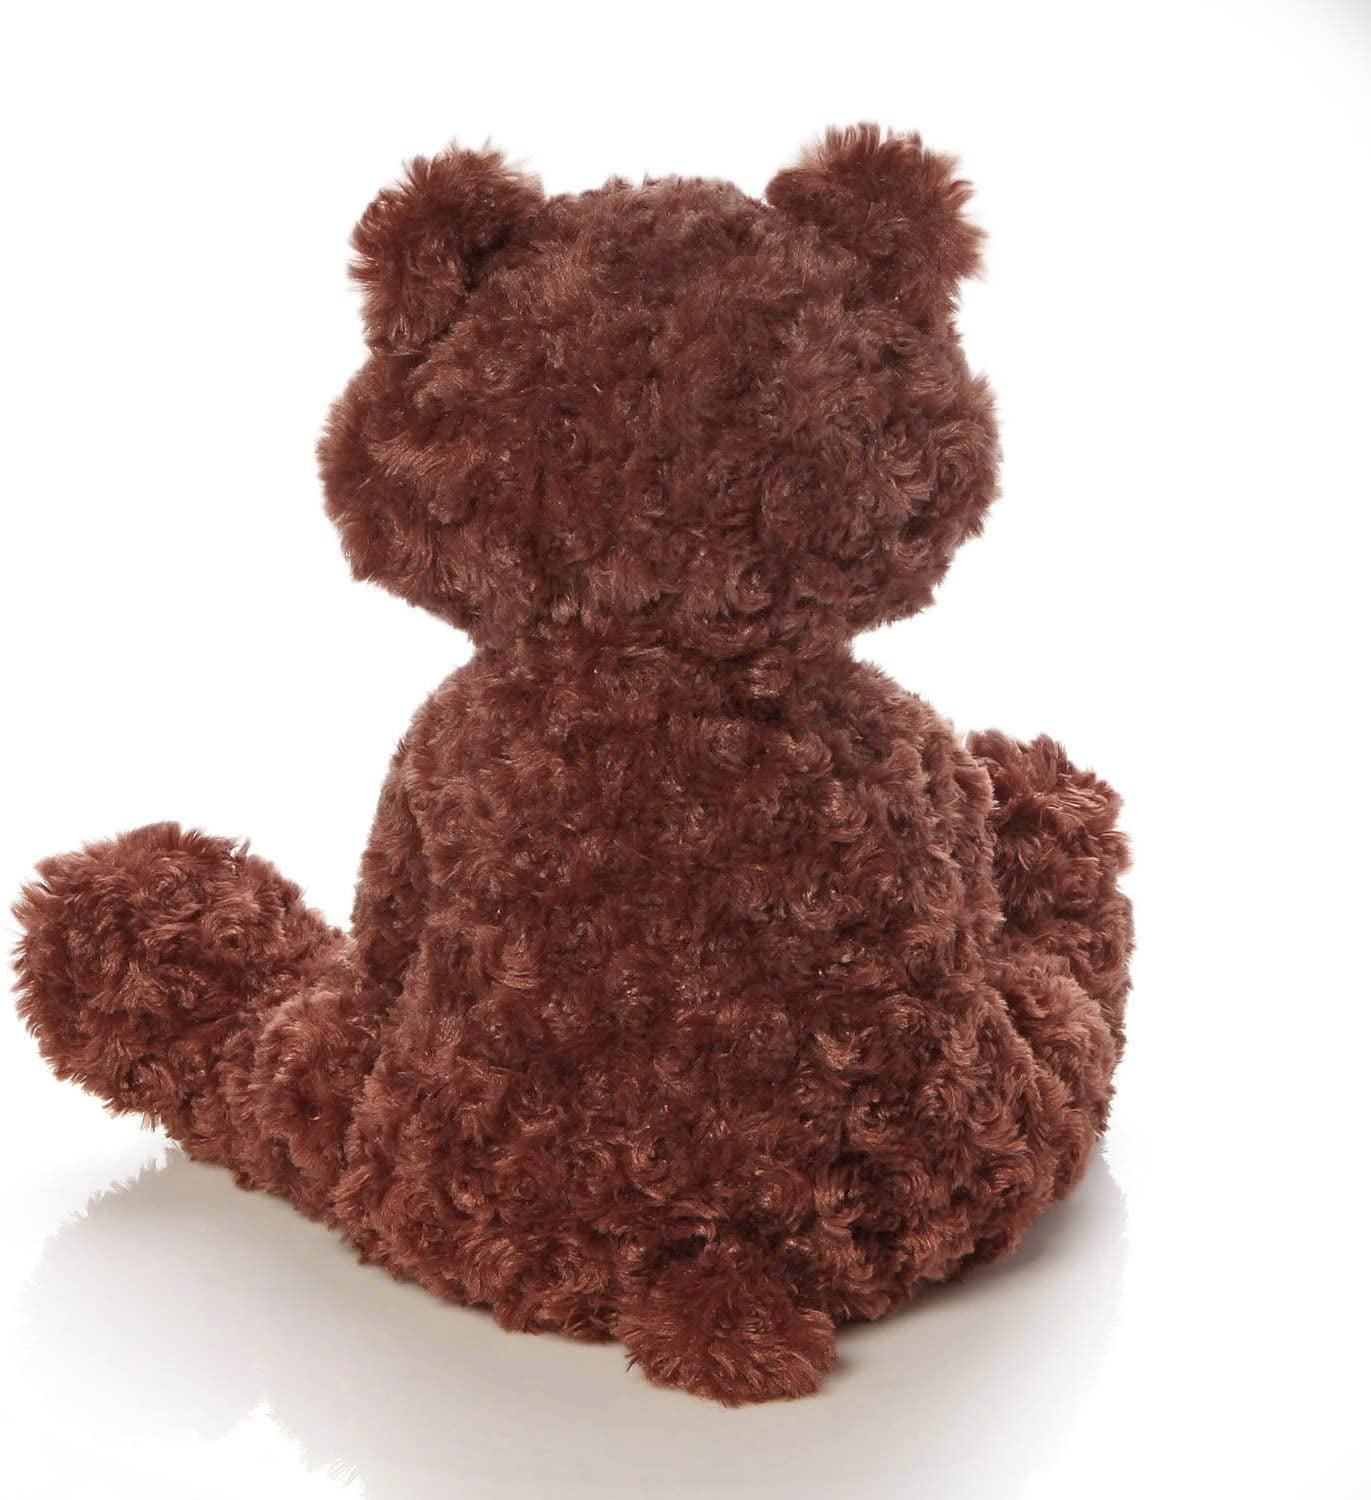 GUND Philbin Teddy Bear Stuffed Animal Plush Chocolate Brown 18"  NEW EXPEDITED 